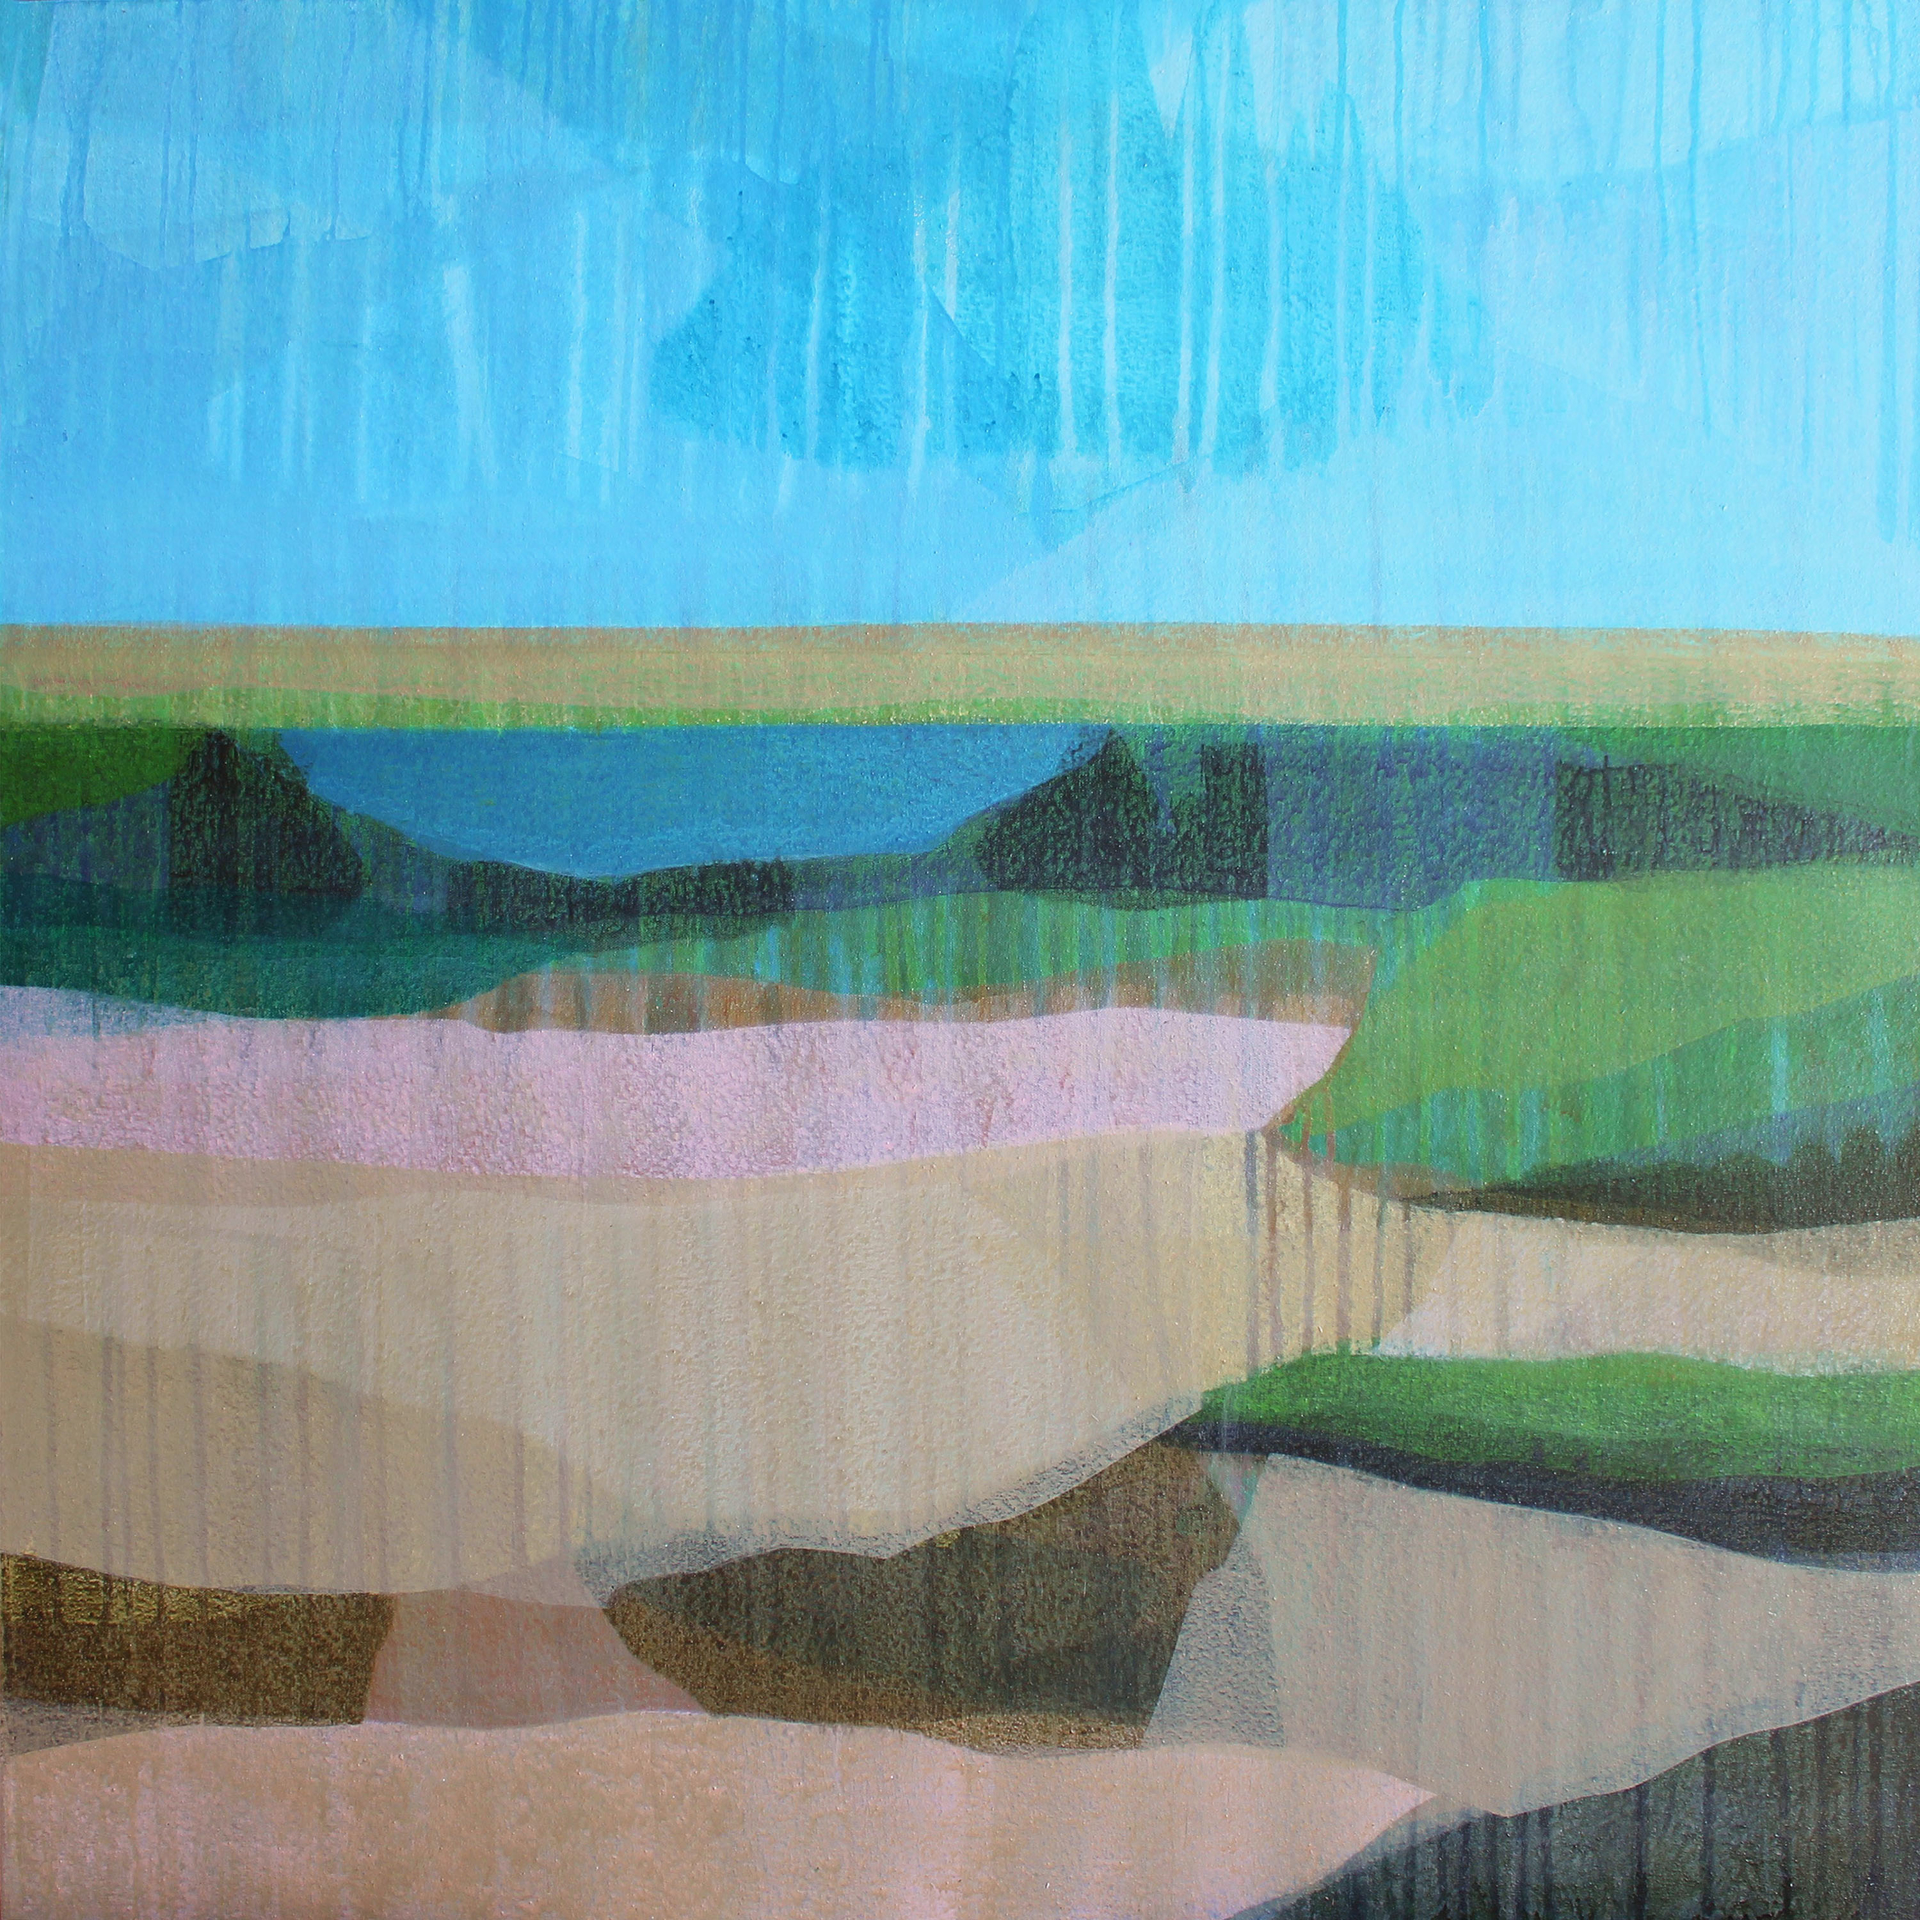 (jubilee) marshscape no. 3 by Katherine Sandoz